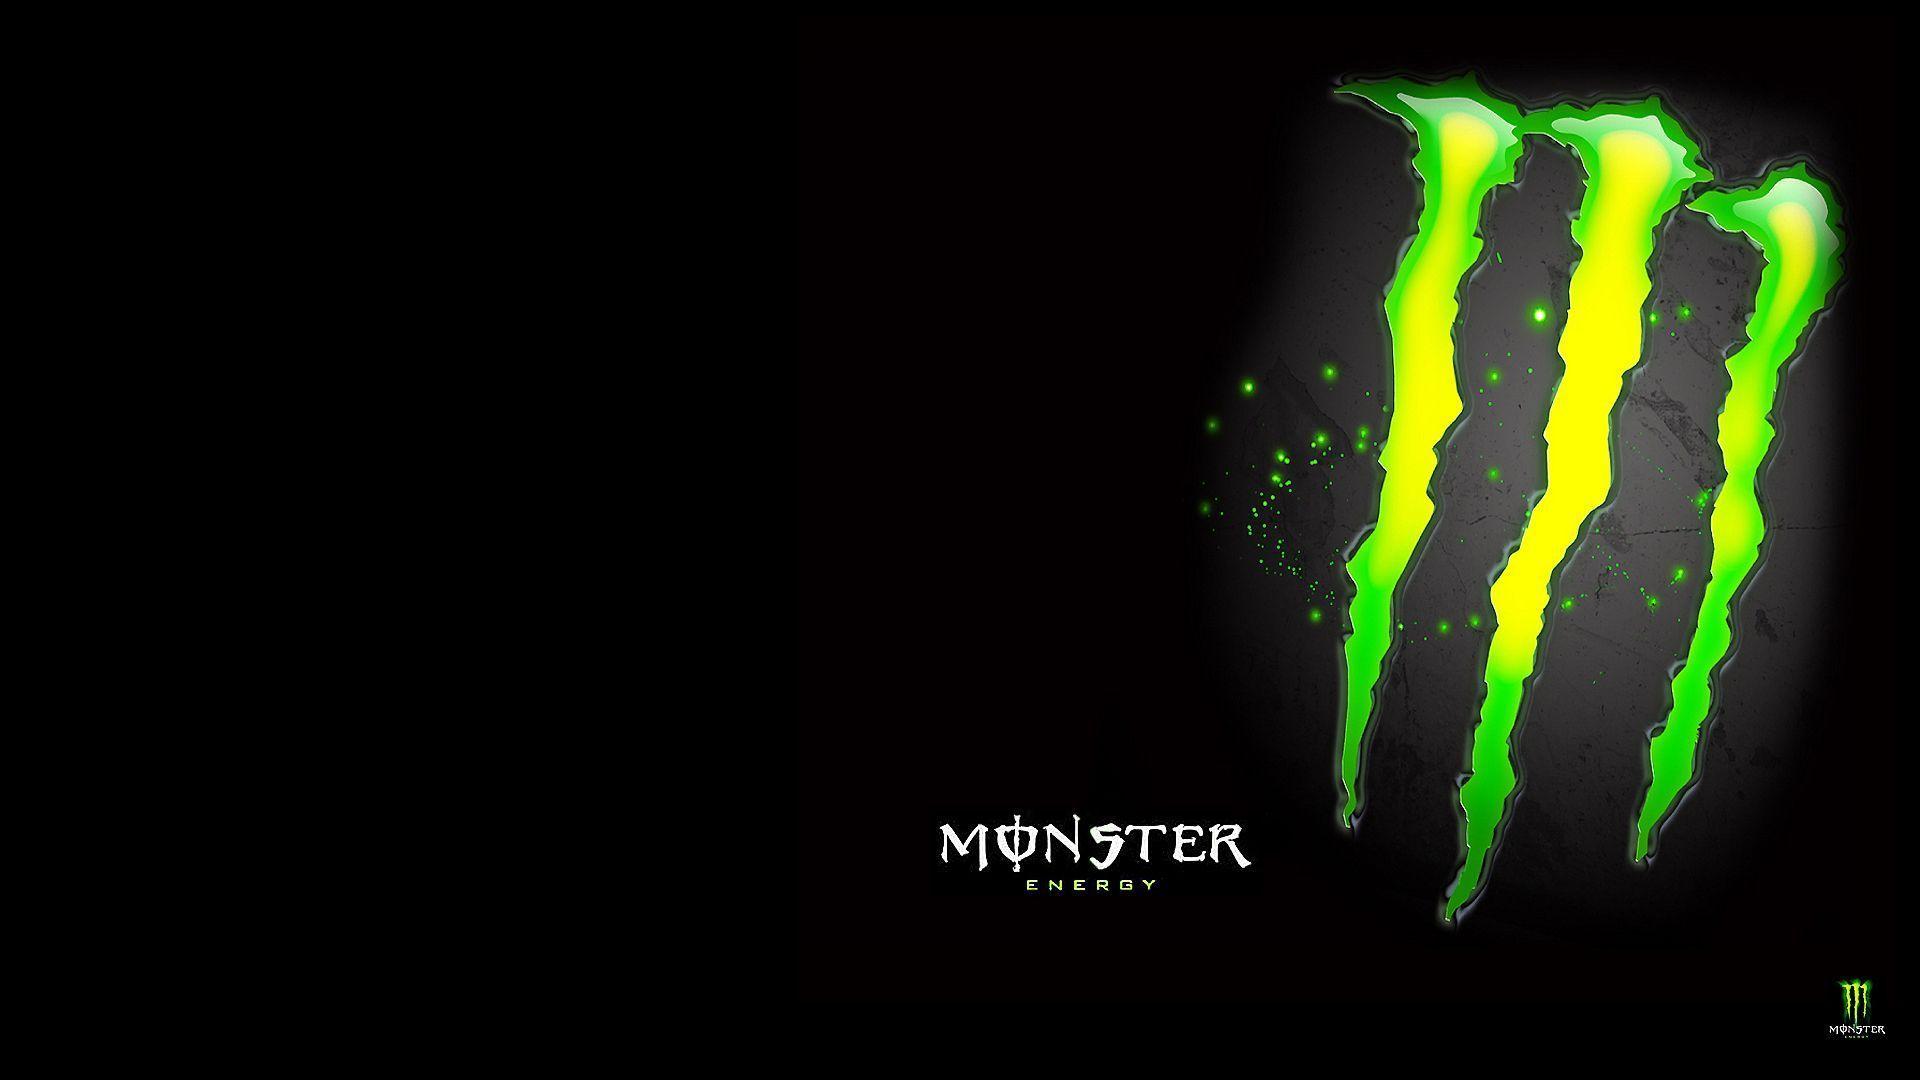 Monster energy drink wallpaper Wide or HD. Digital Art Wallpaper